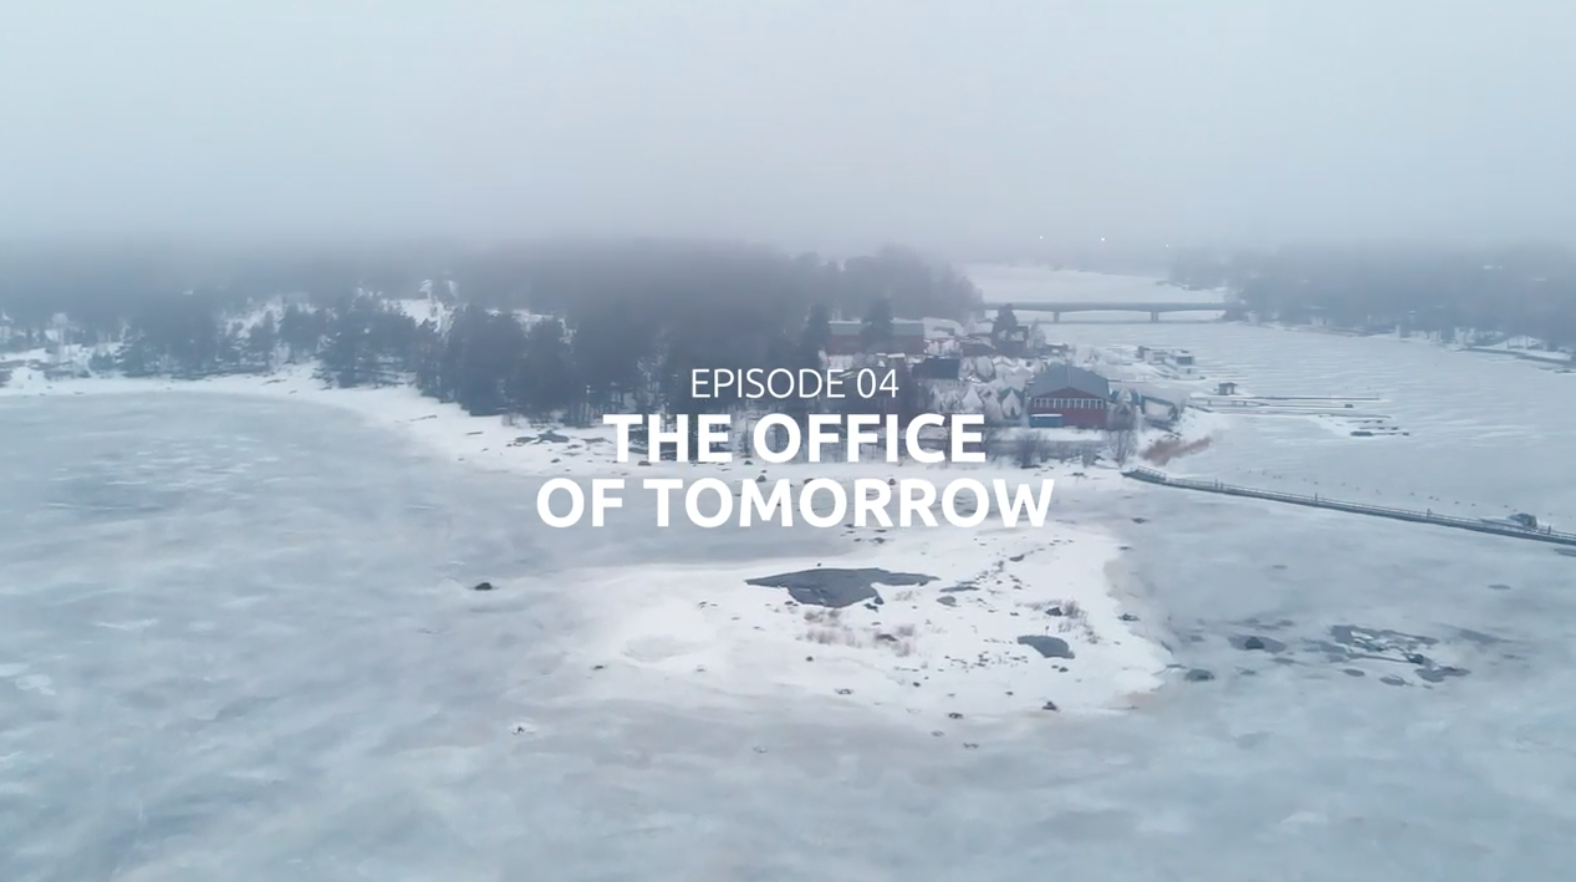 @Sigfox: “The Office of Tomorrow”, el cuarto episodio de ‘ENTER THE #0GWORLD’ vuelve desde Finlandia